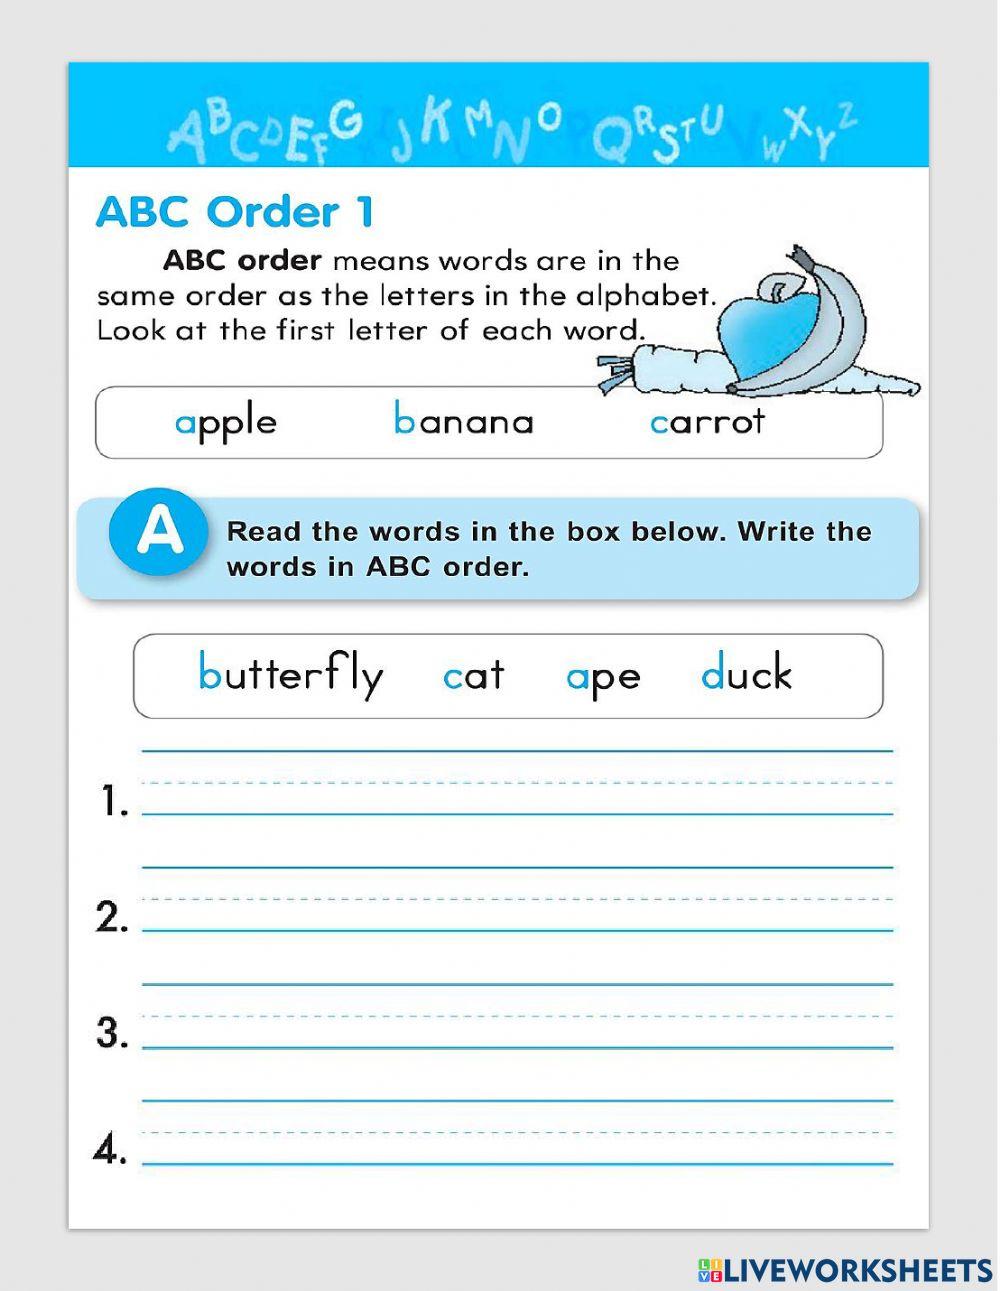 ABC Order 1